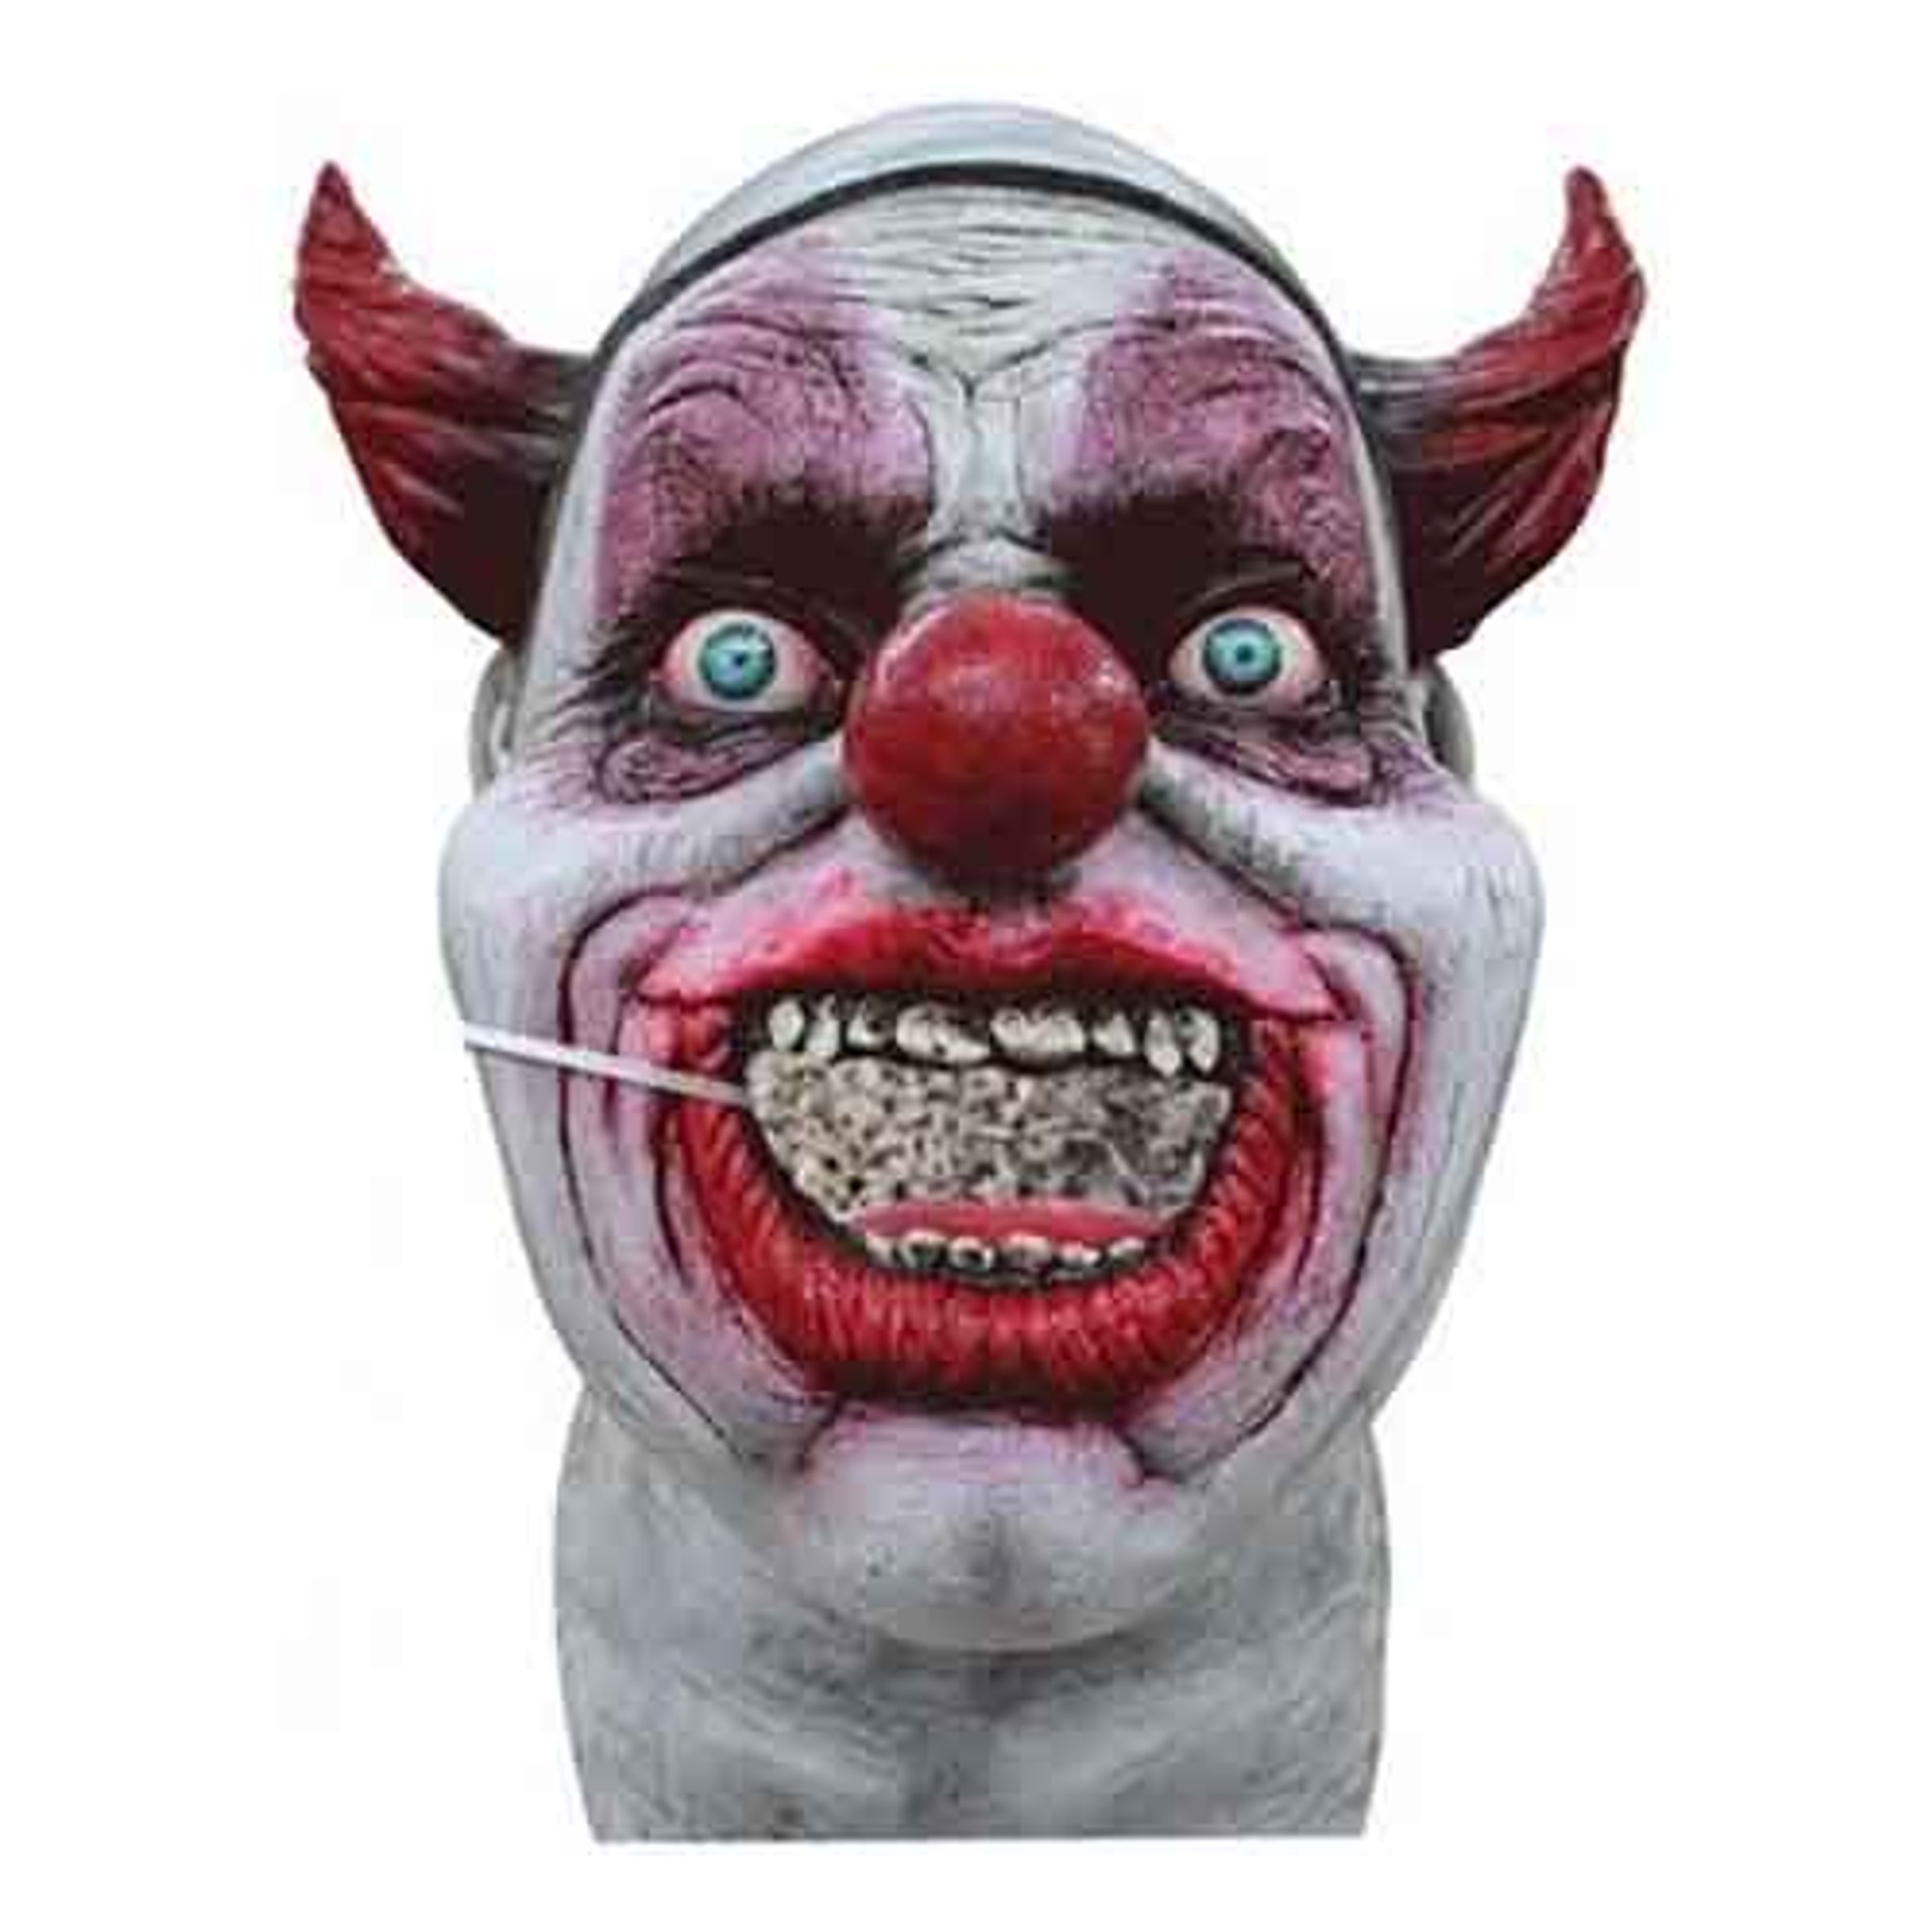 Maggot Clownmask - One size